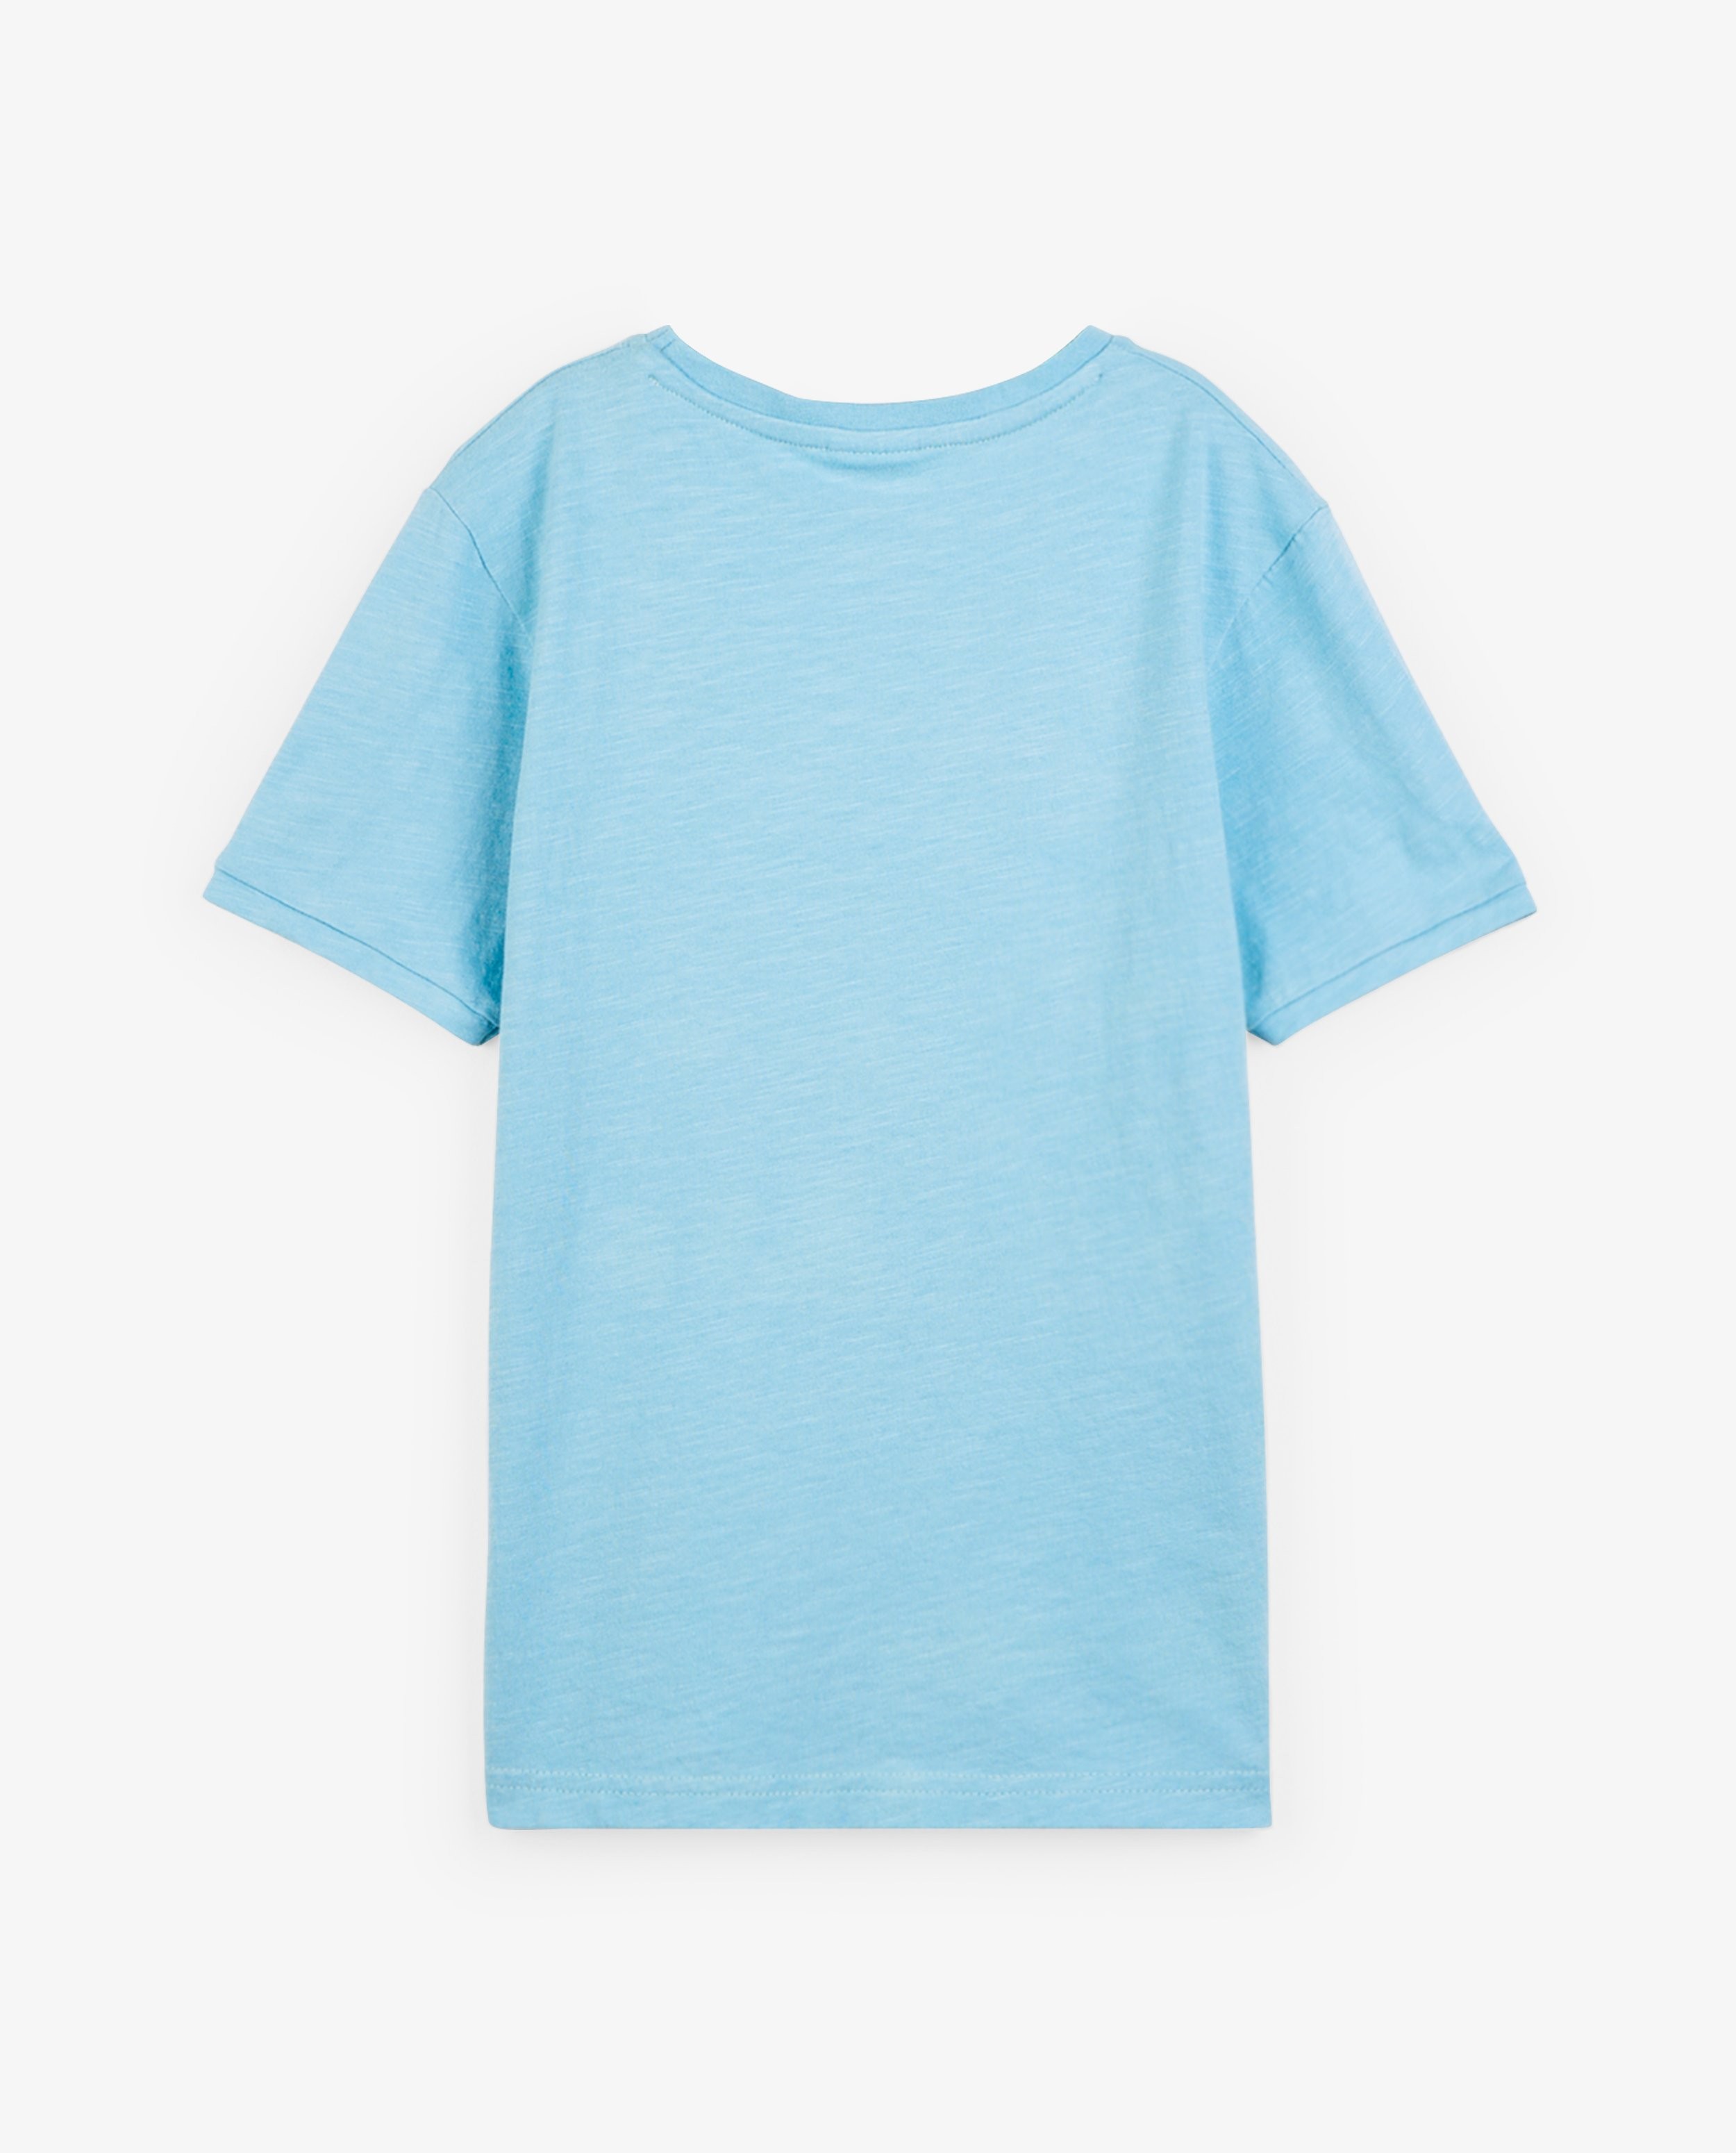 T-shirts - T-shirt bleu clair CKS